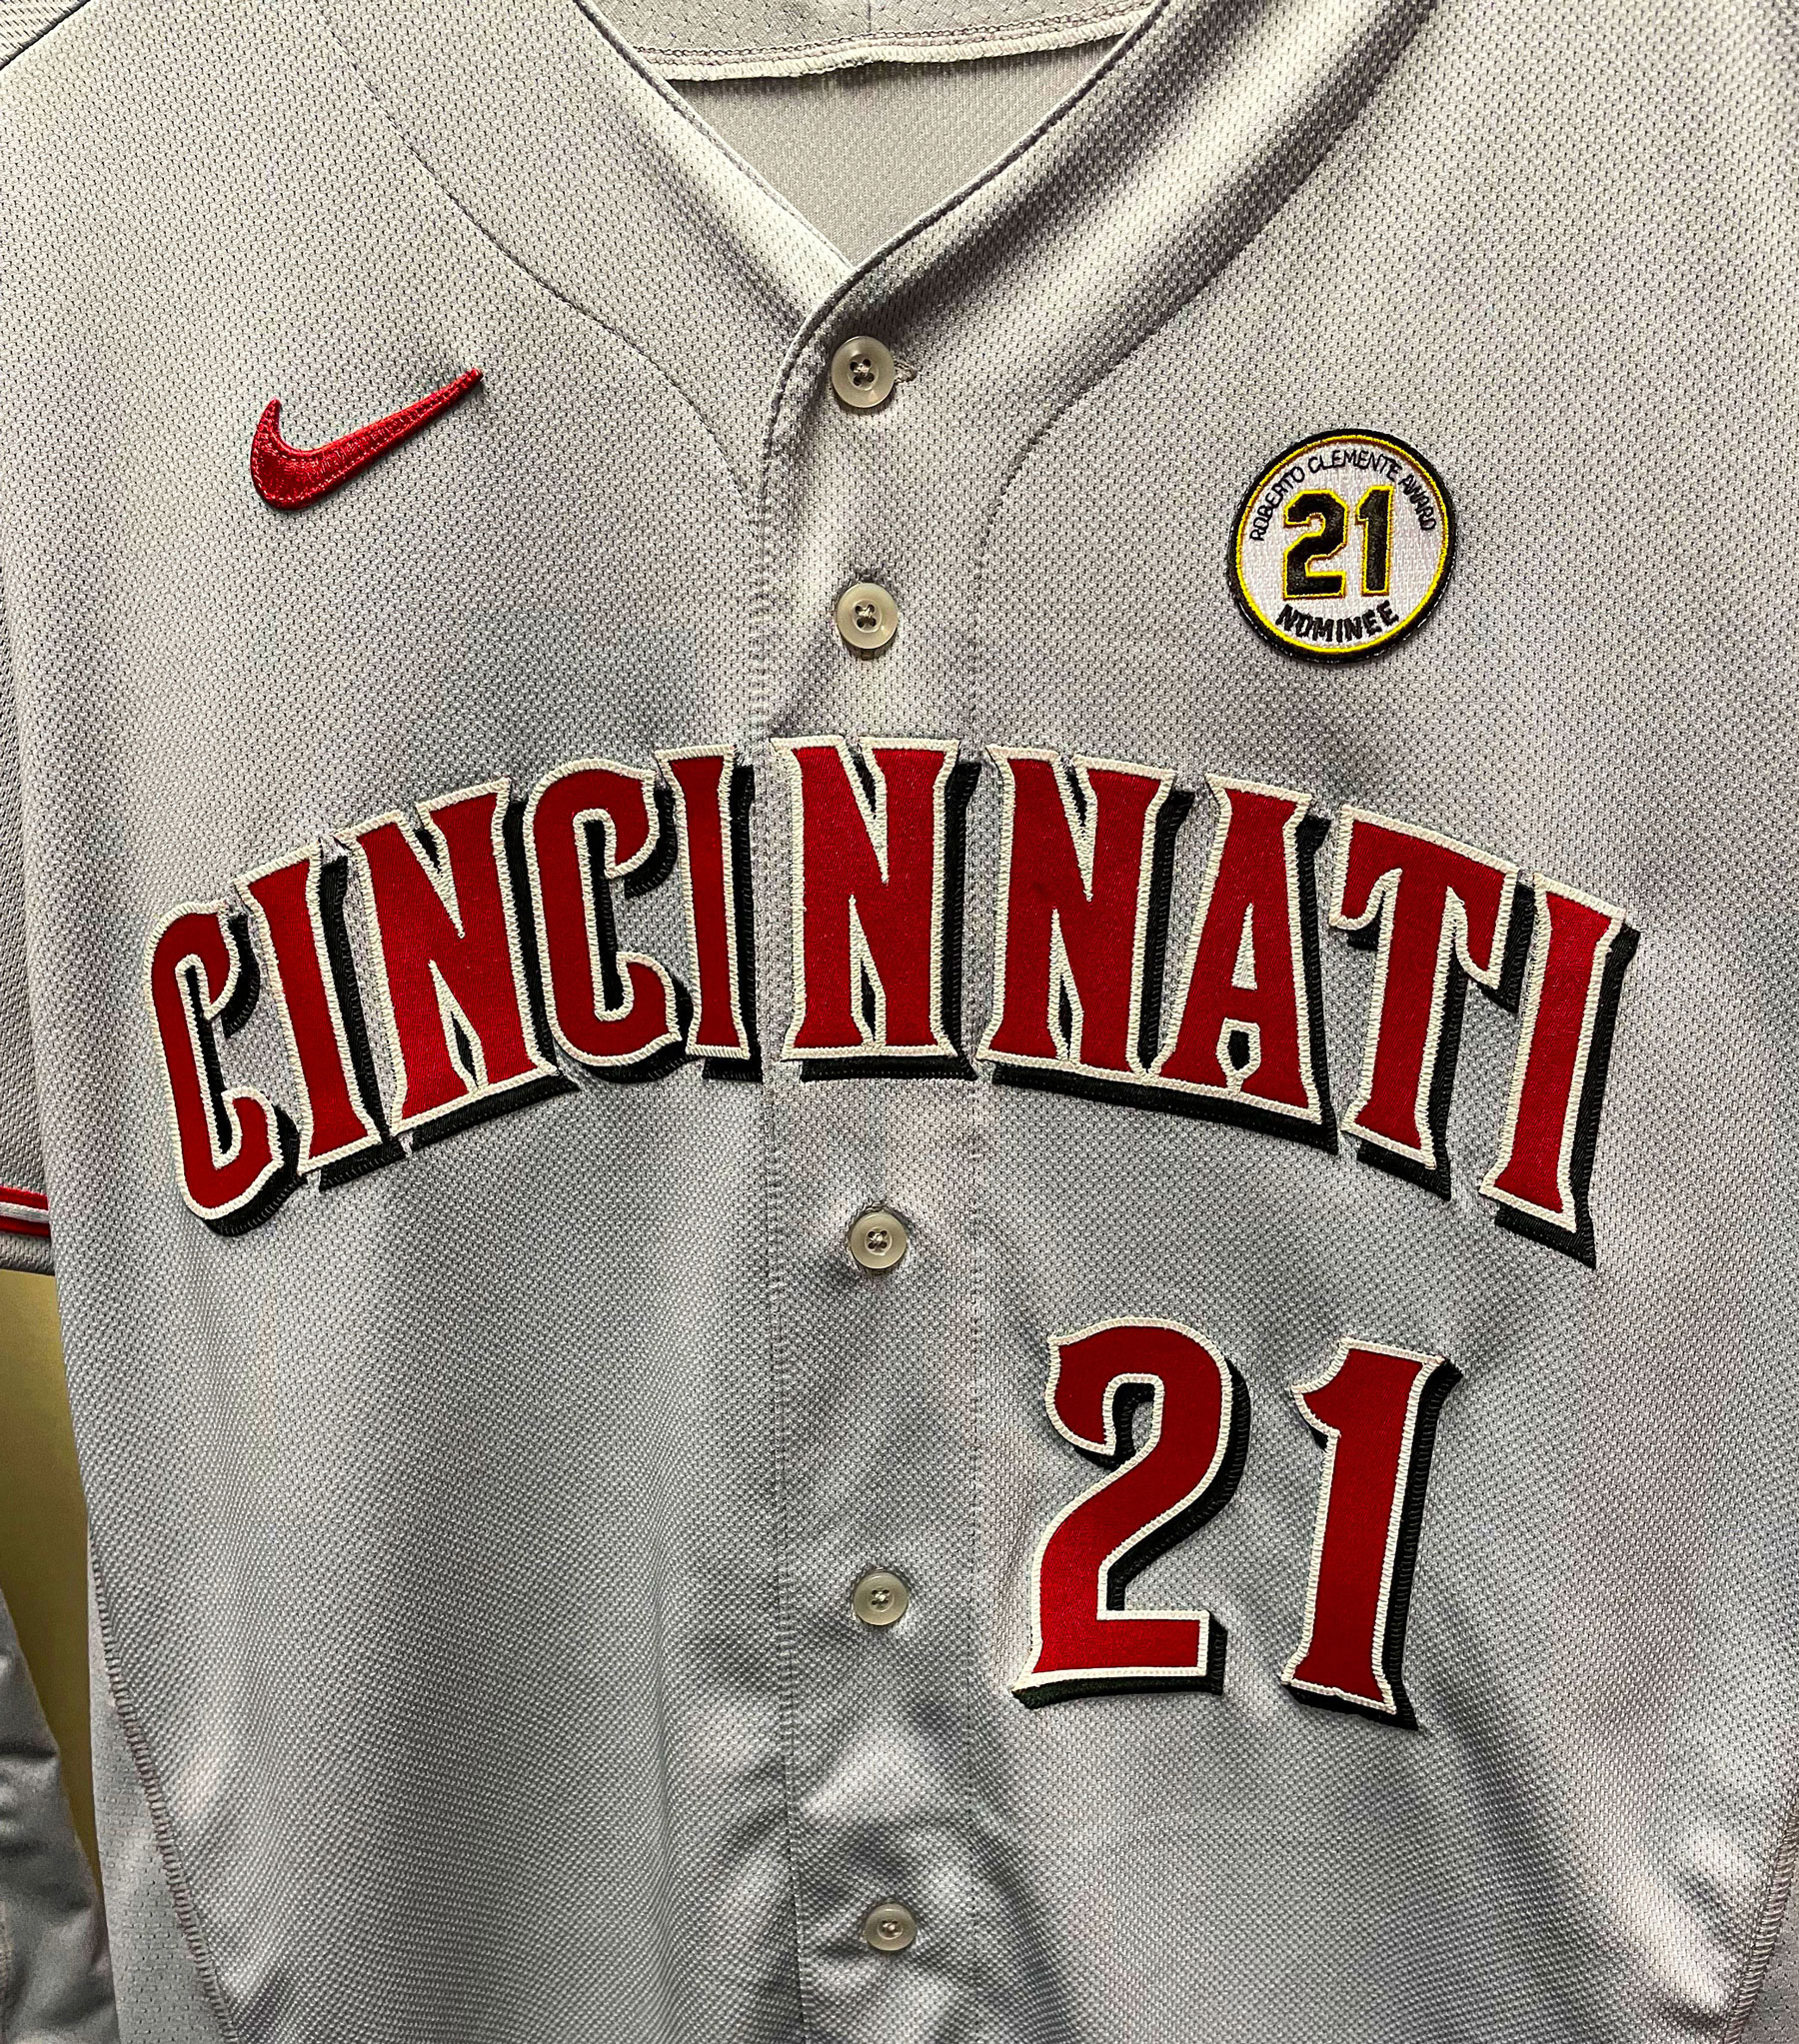 Cincinnati Reds on Twitter: Joey Votto's No. 21 jersey for